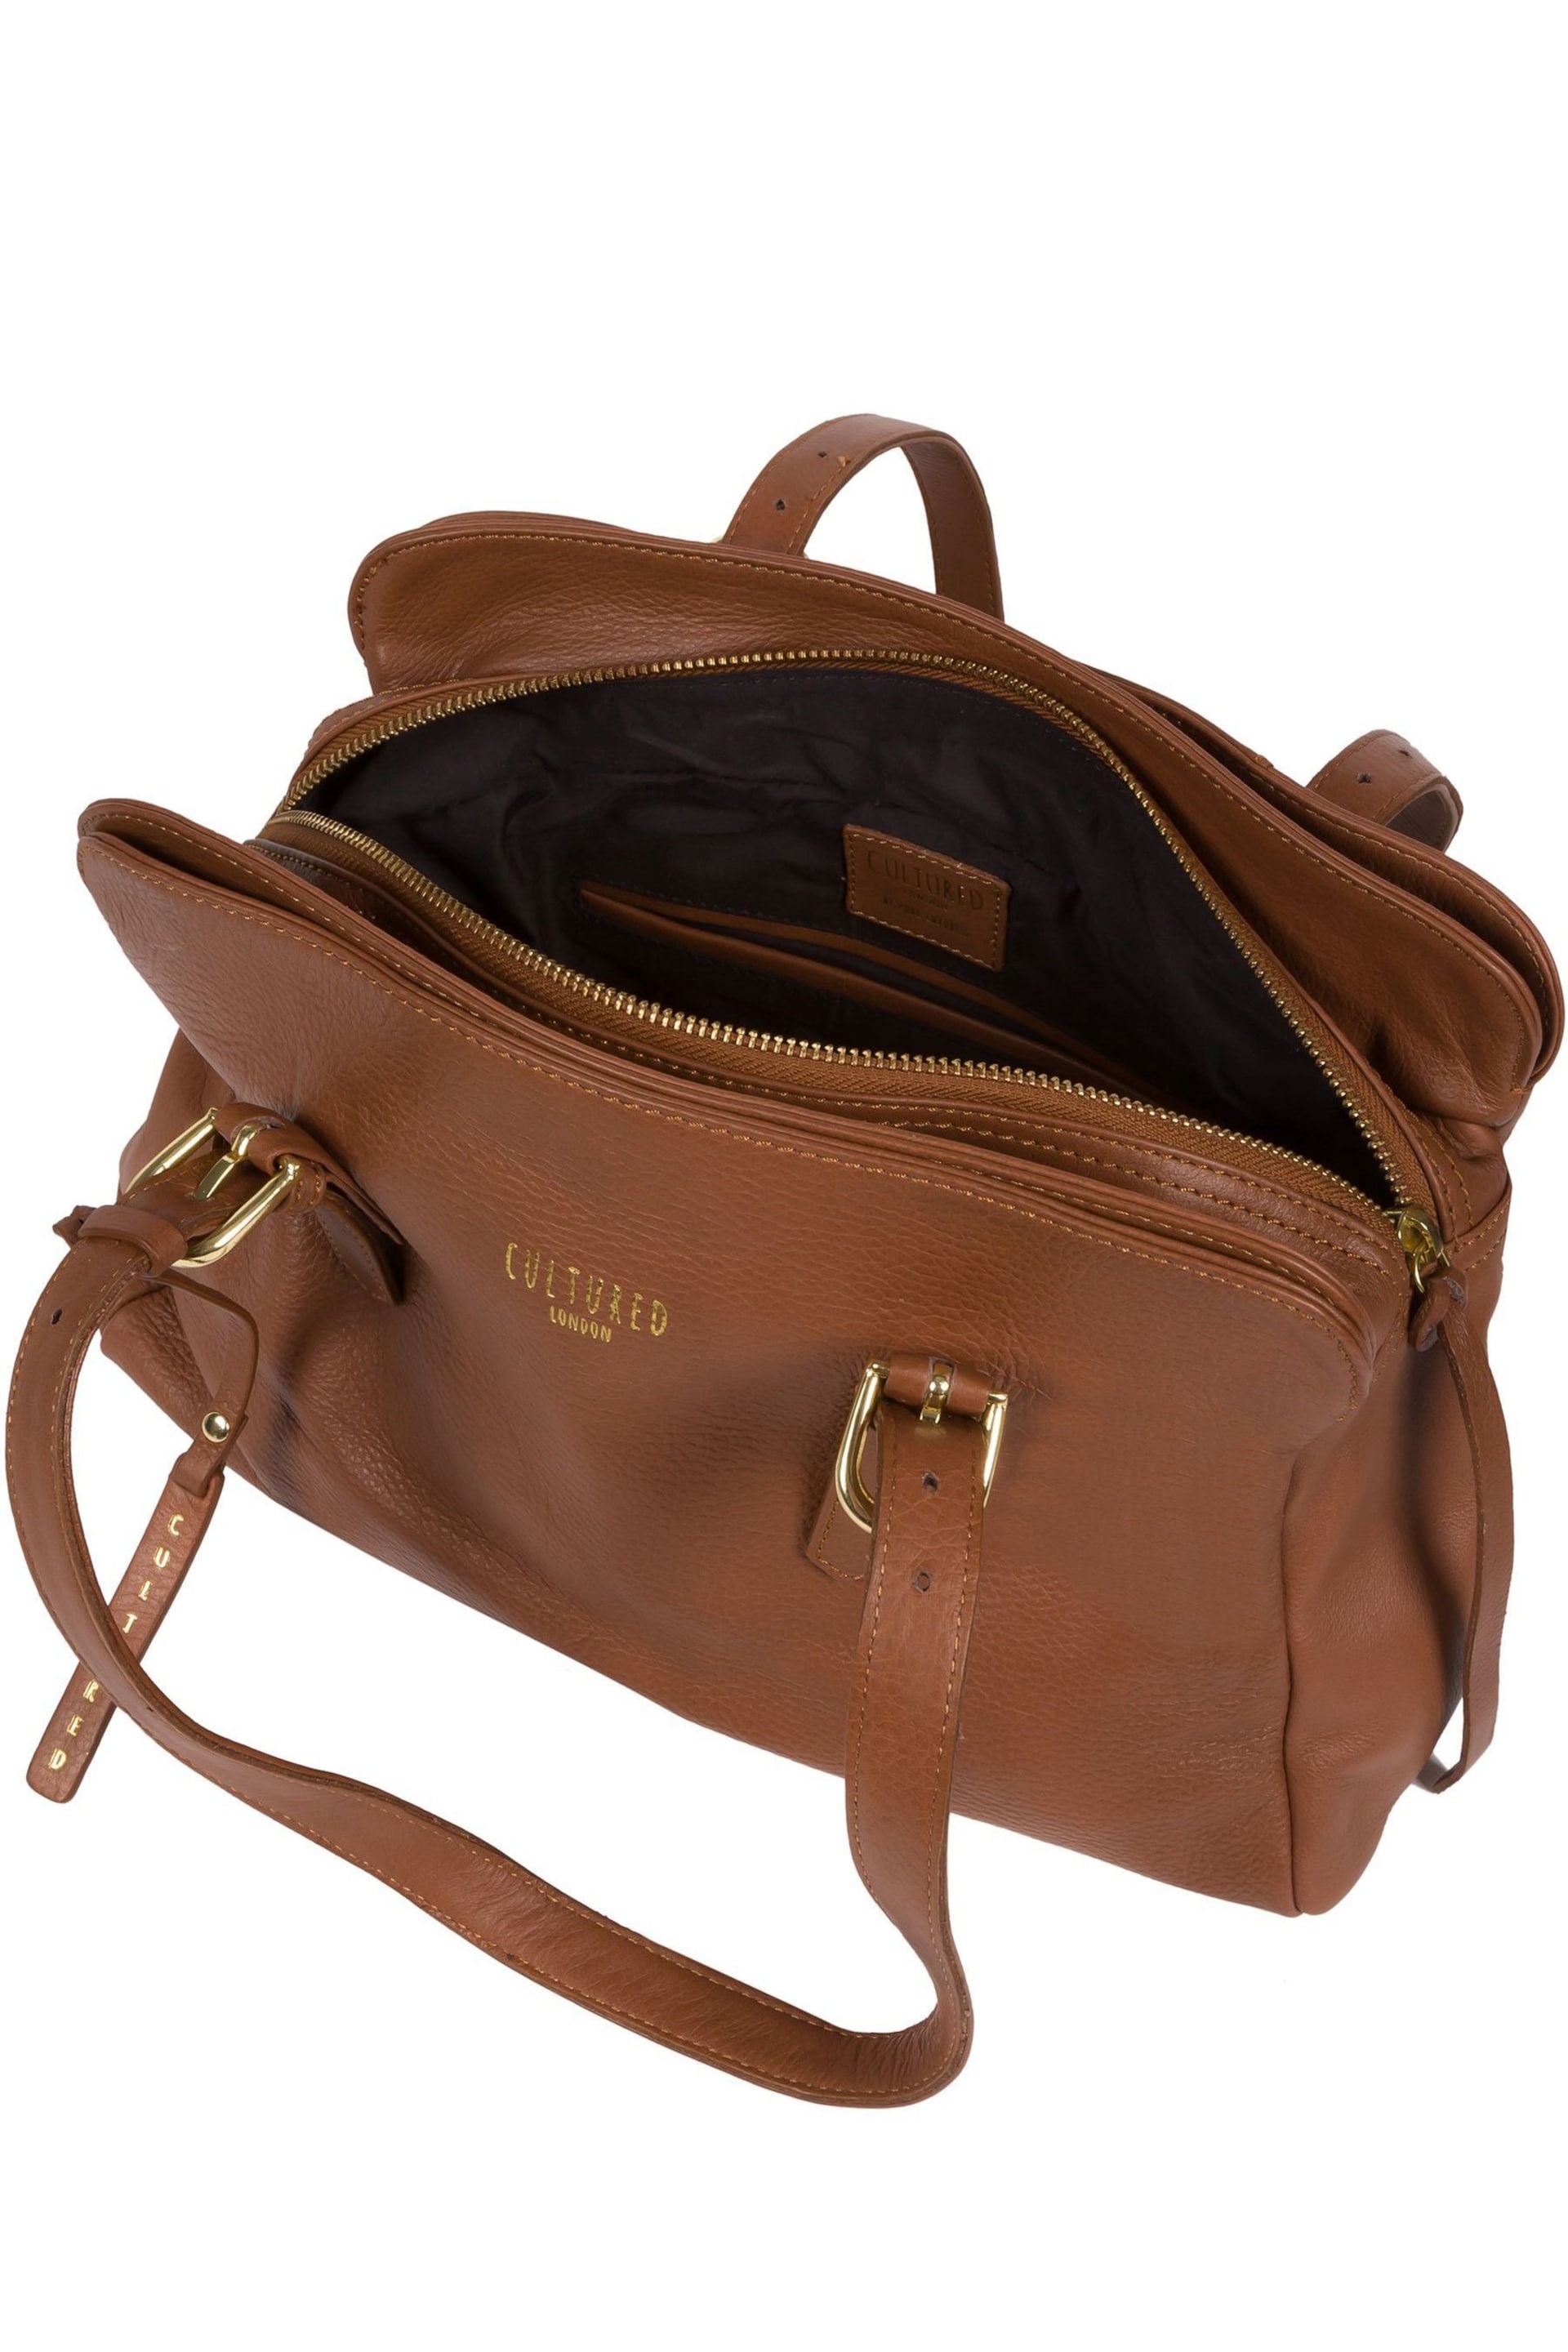 Cultured London Beckenham Leather Handbag - Image 4 of 6